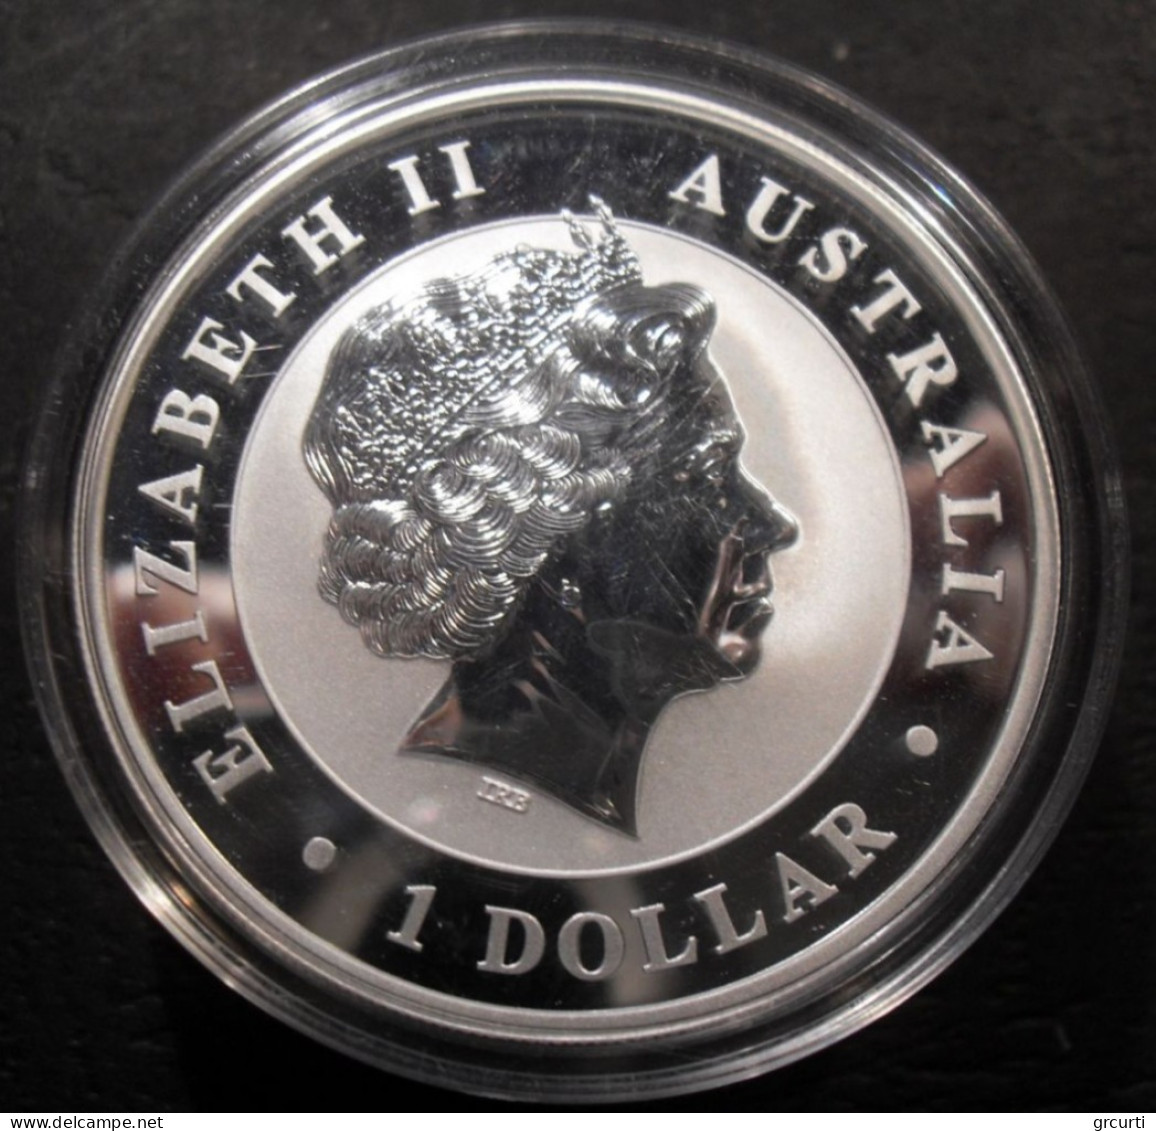 Australia - 1 Dollar 2011 - Koala - KM# 1689 - Silver Bullions